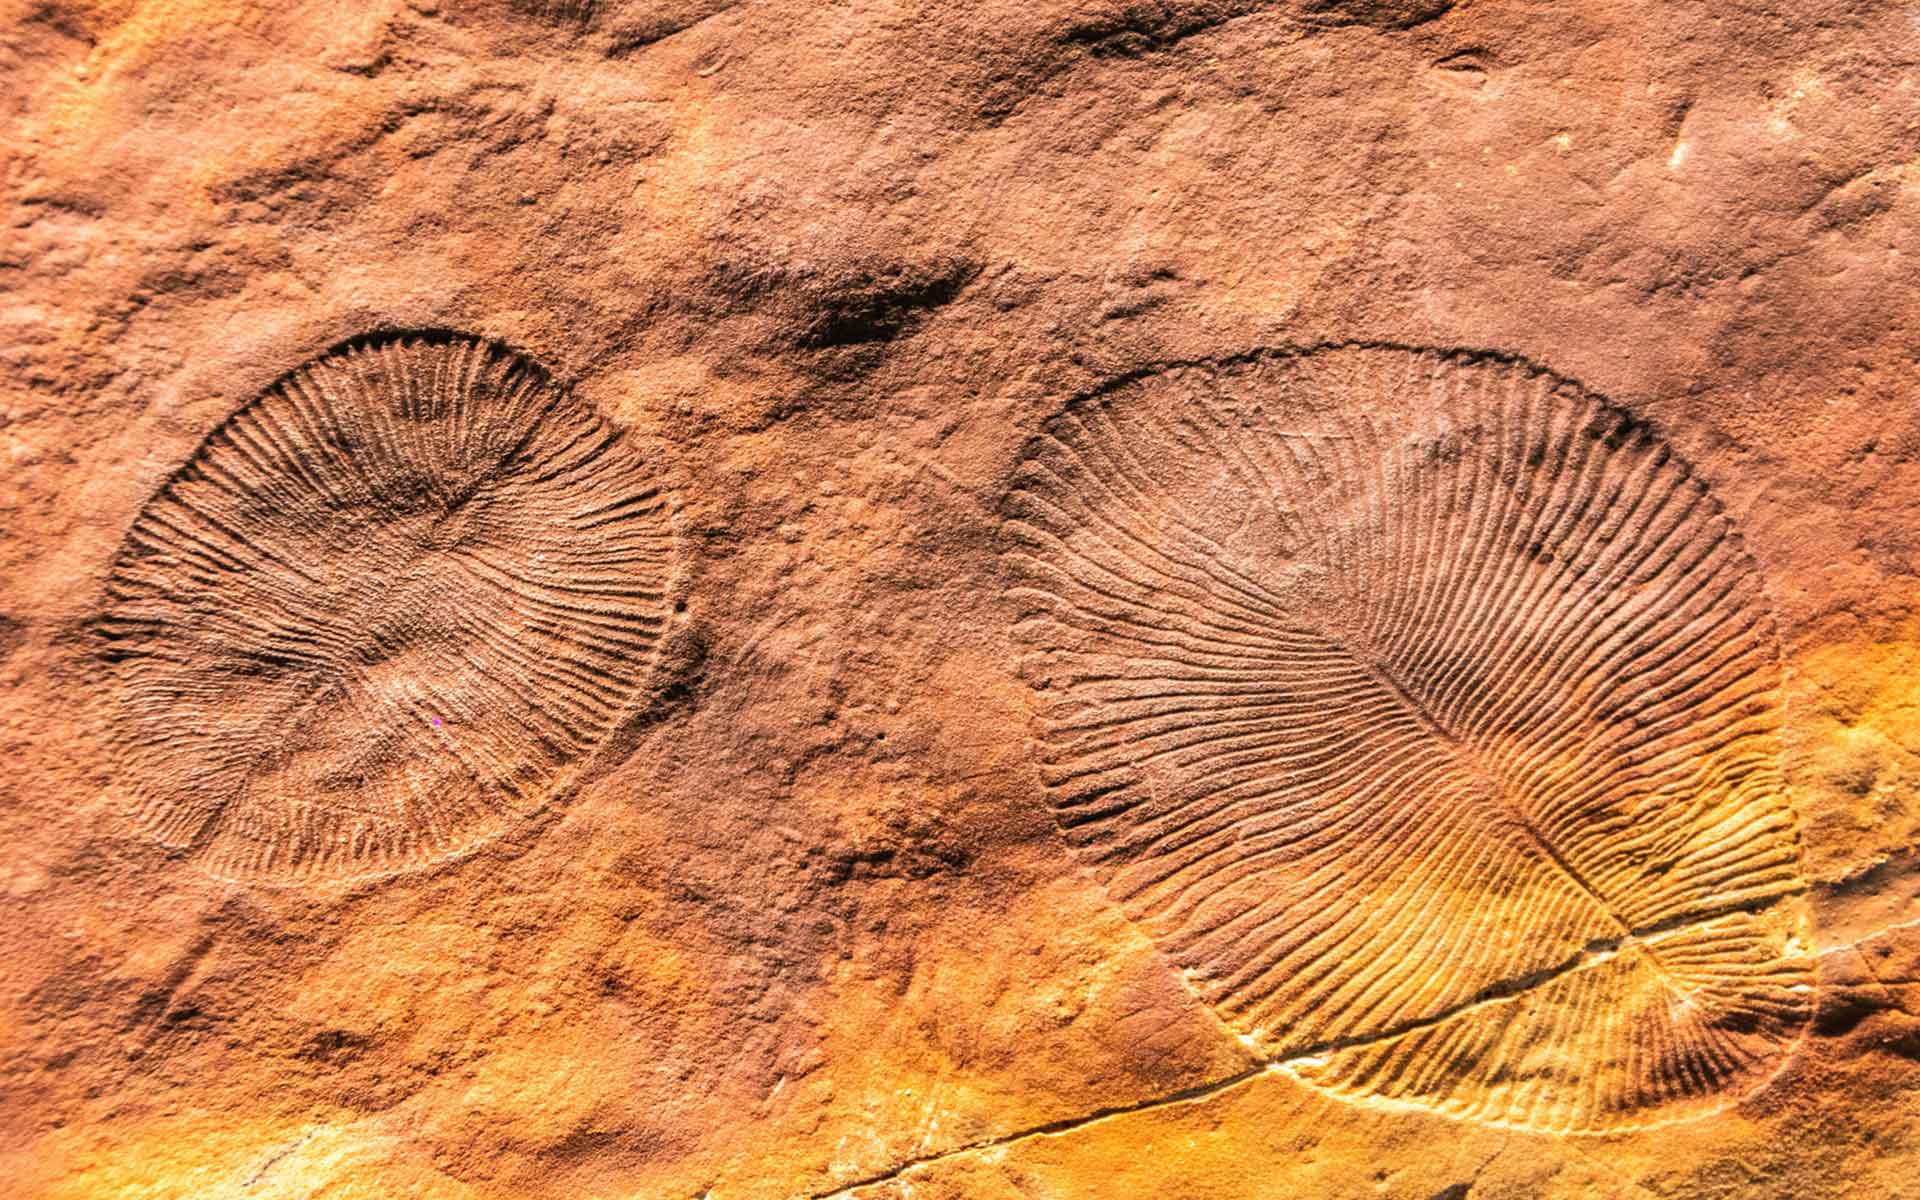 Dicksonia, an Ediacaran fossil